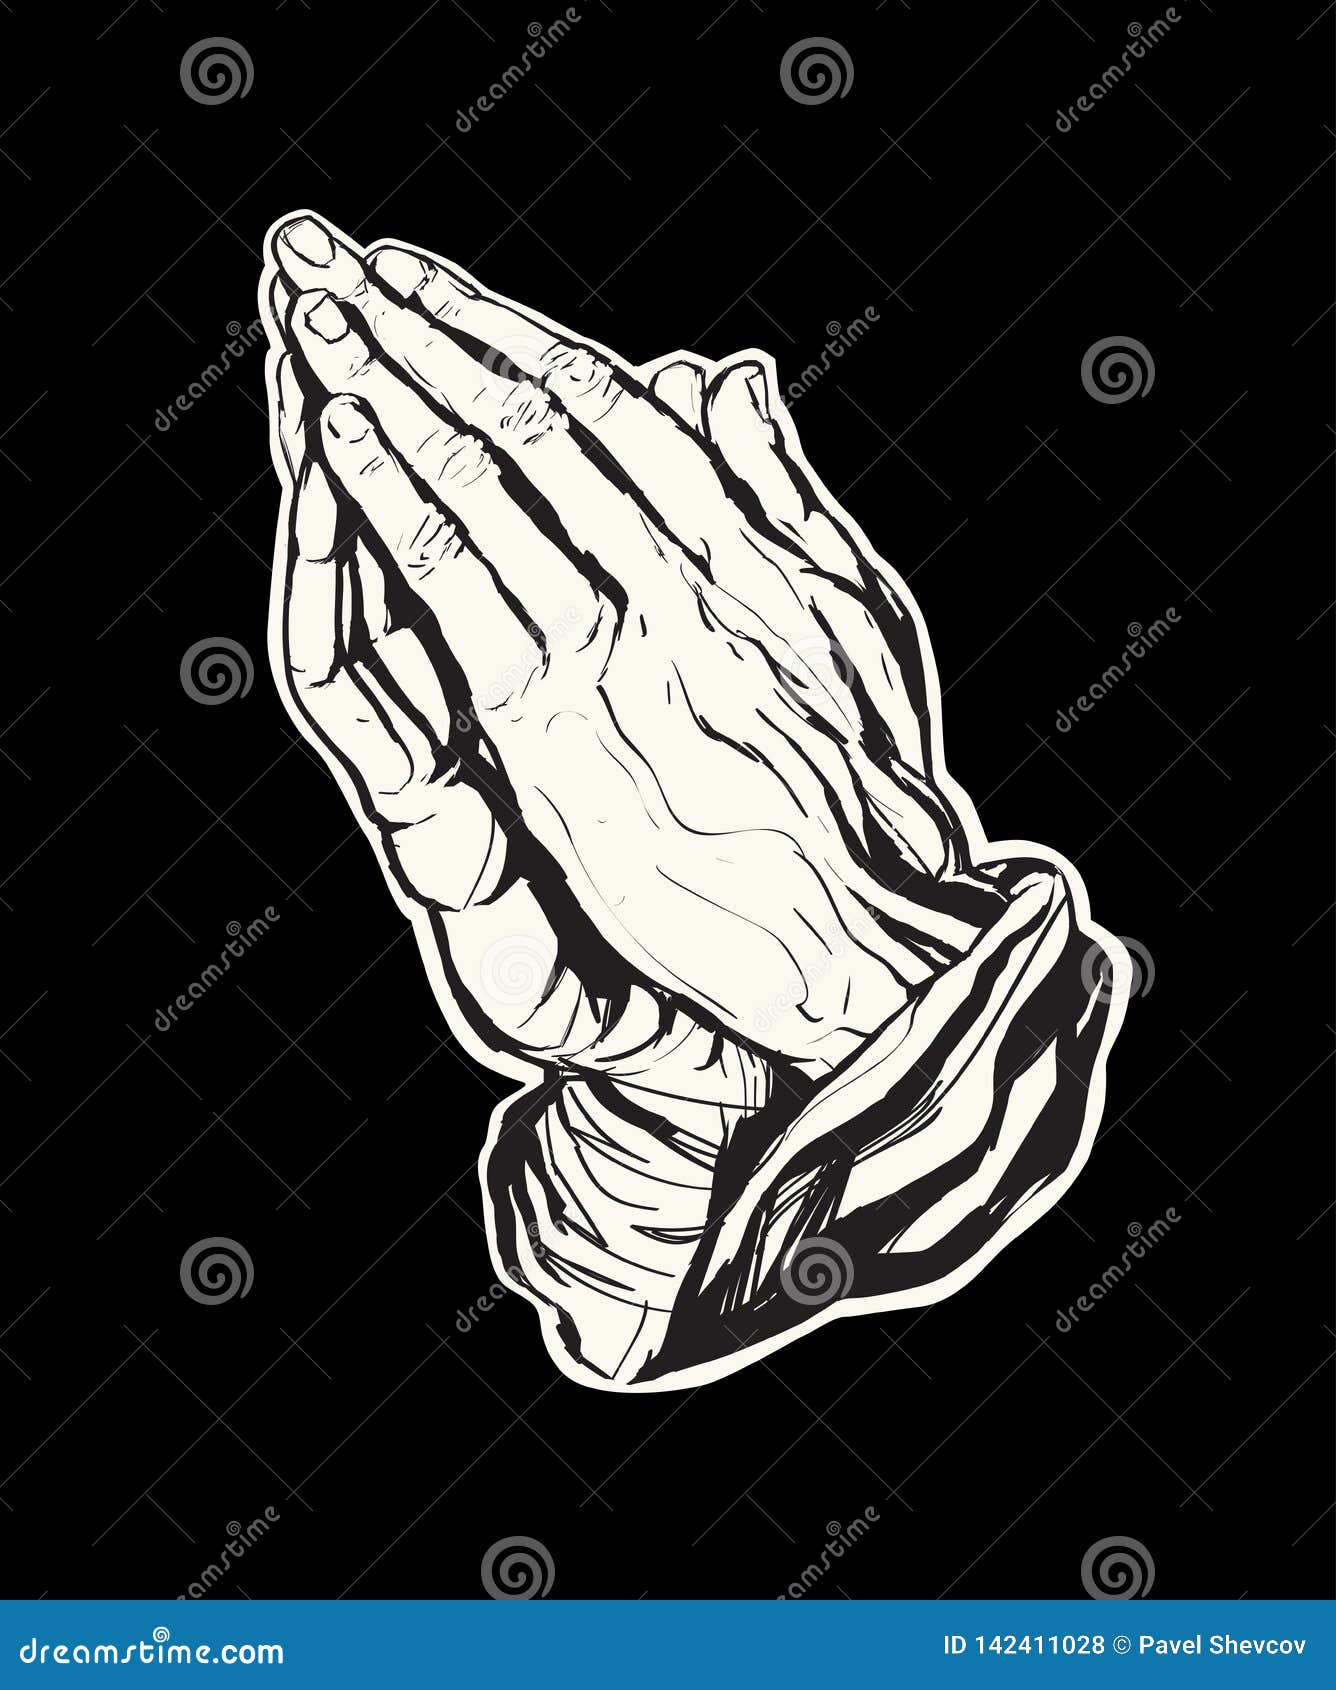 praying hands images